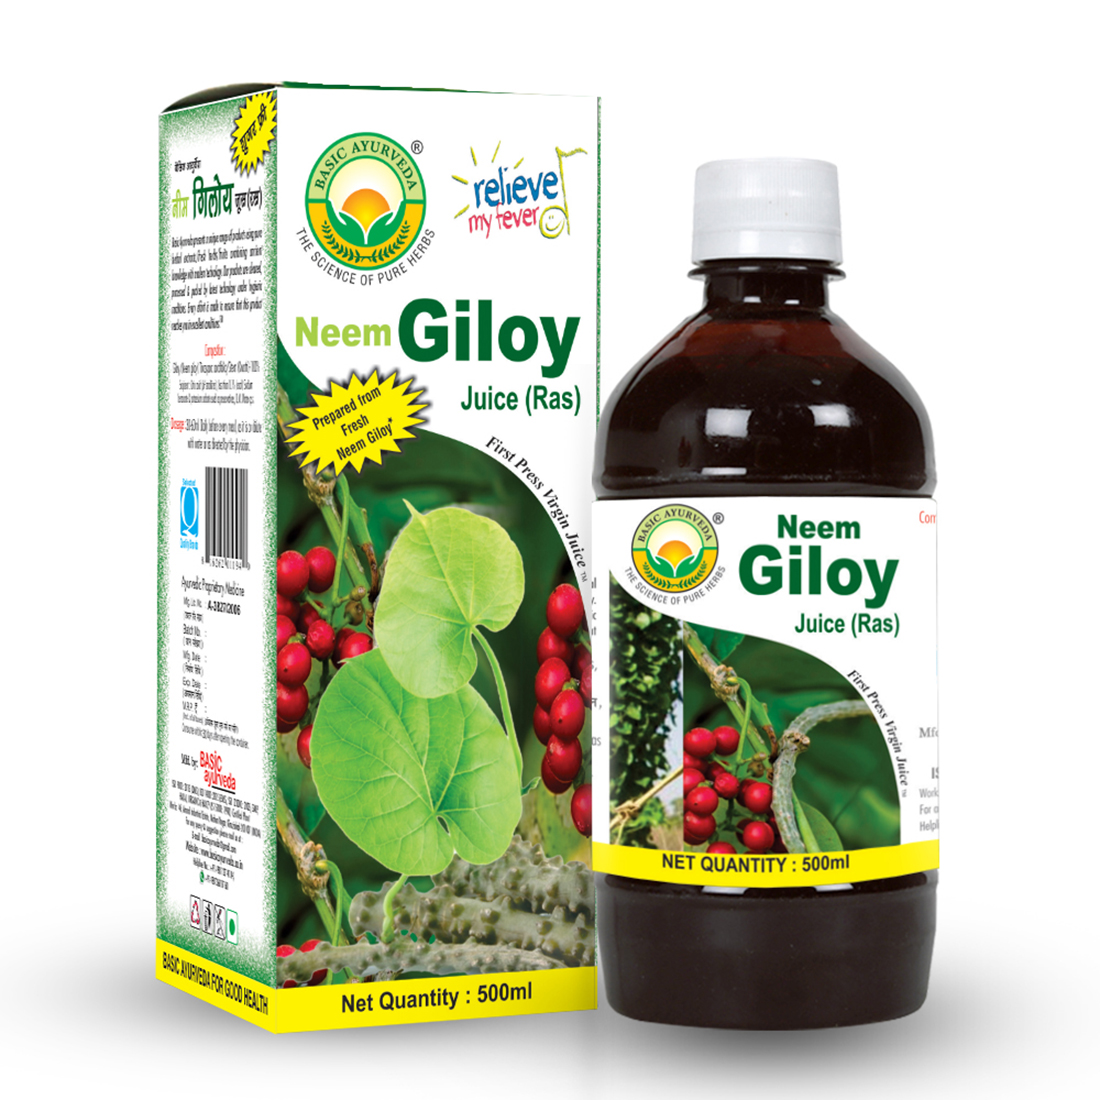 Neem Giloy Juice (Ras)